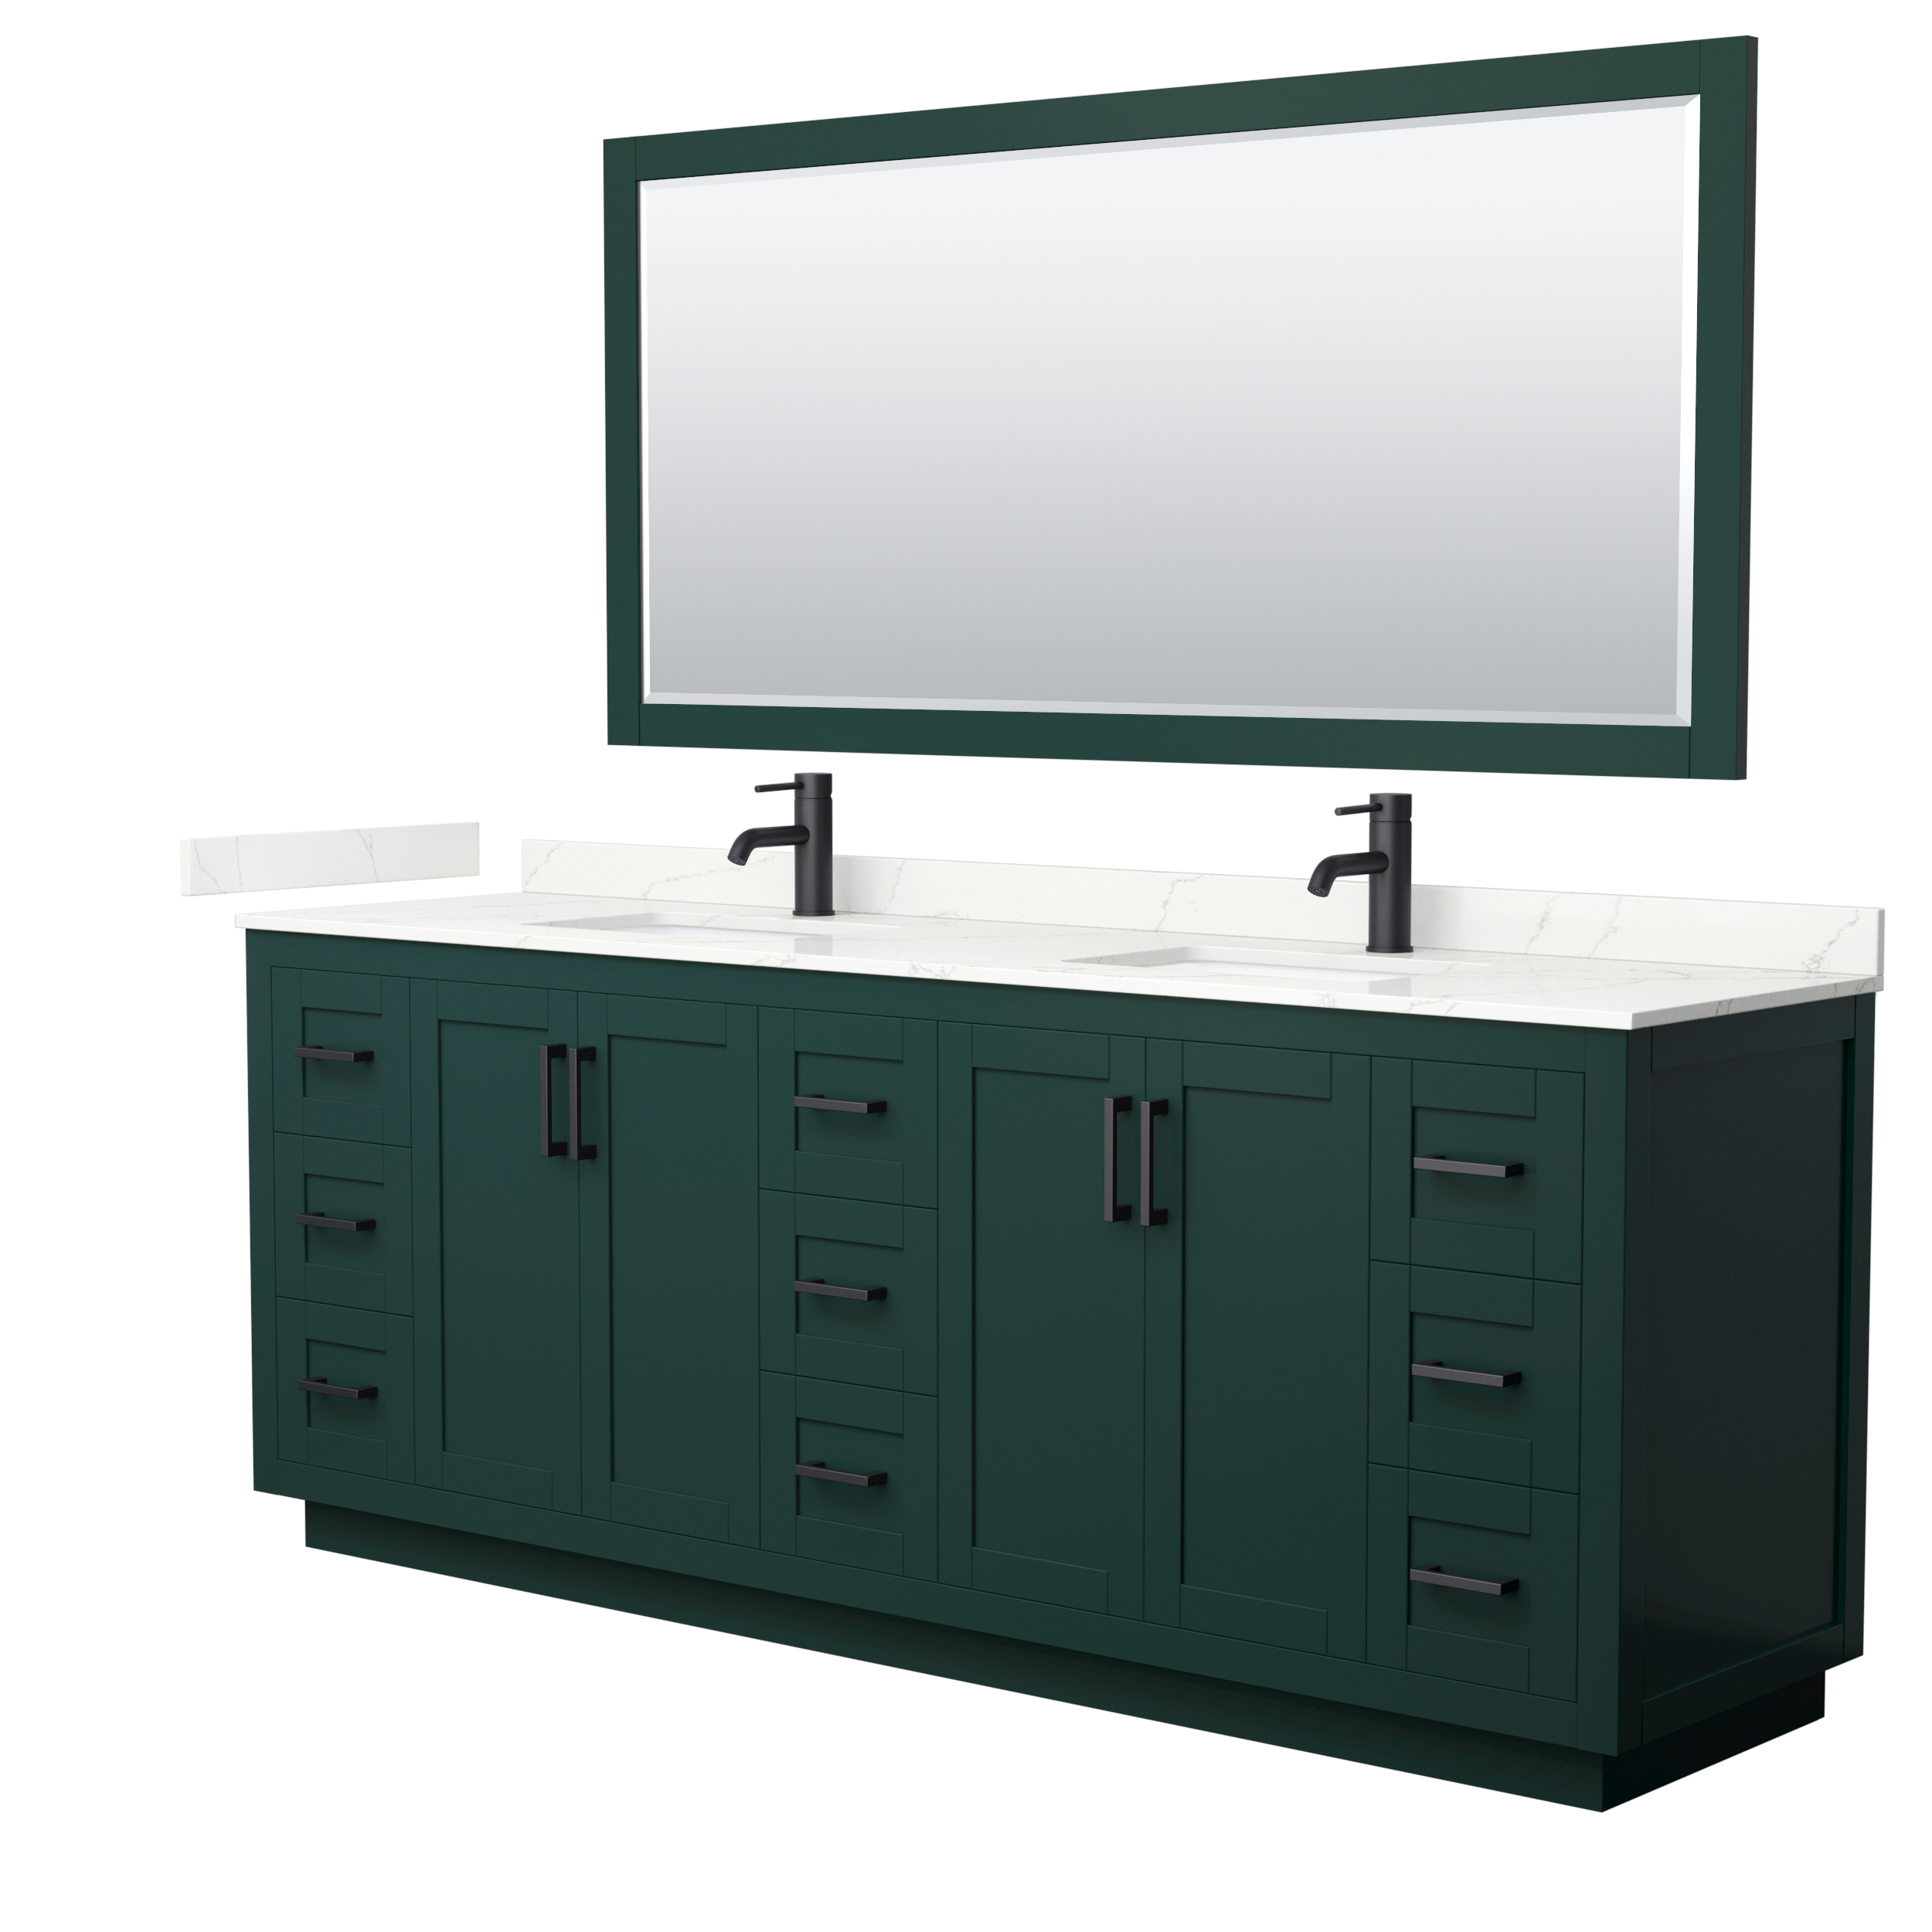 Miranda 84" Double Vanity with optional Carrara Marble Counter - Green WC-2929-84-DBL-VAN-GRN__